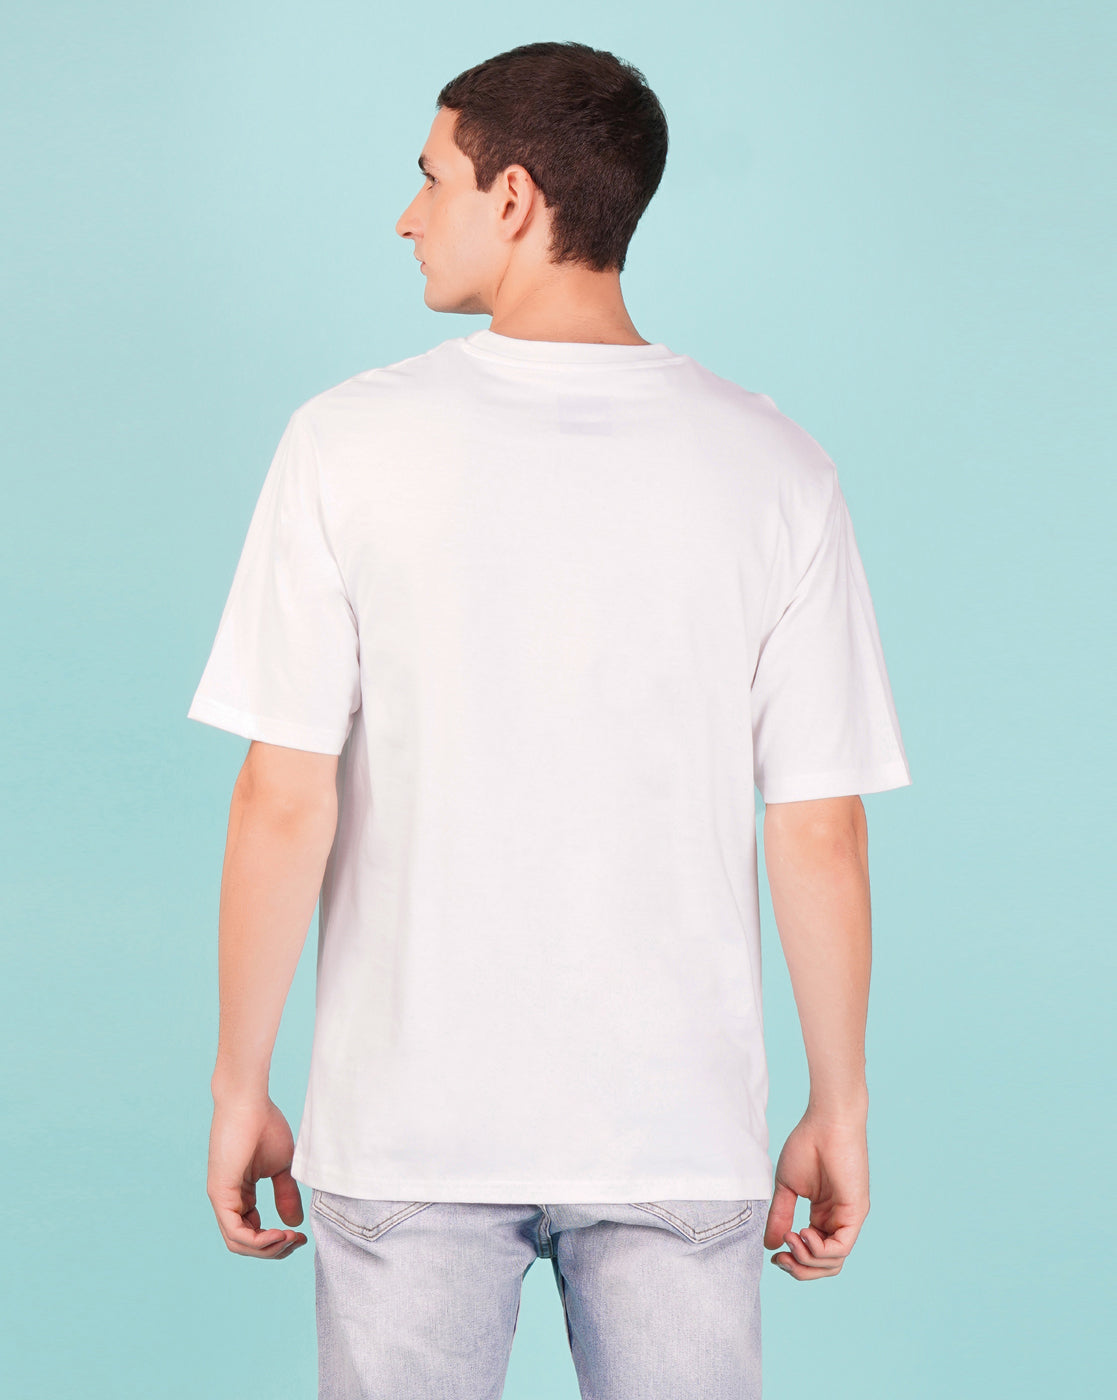 Nusyl White Mood Printed oversized t-shirt